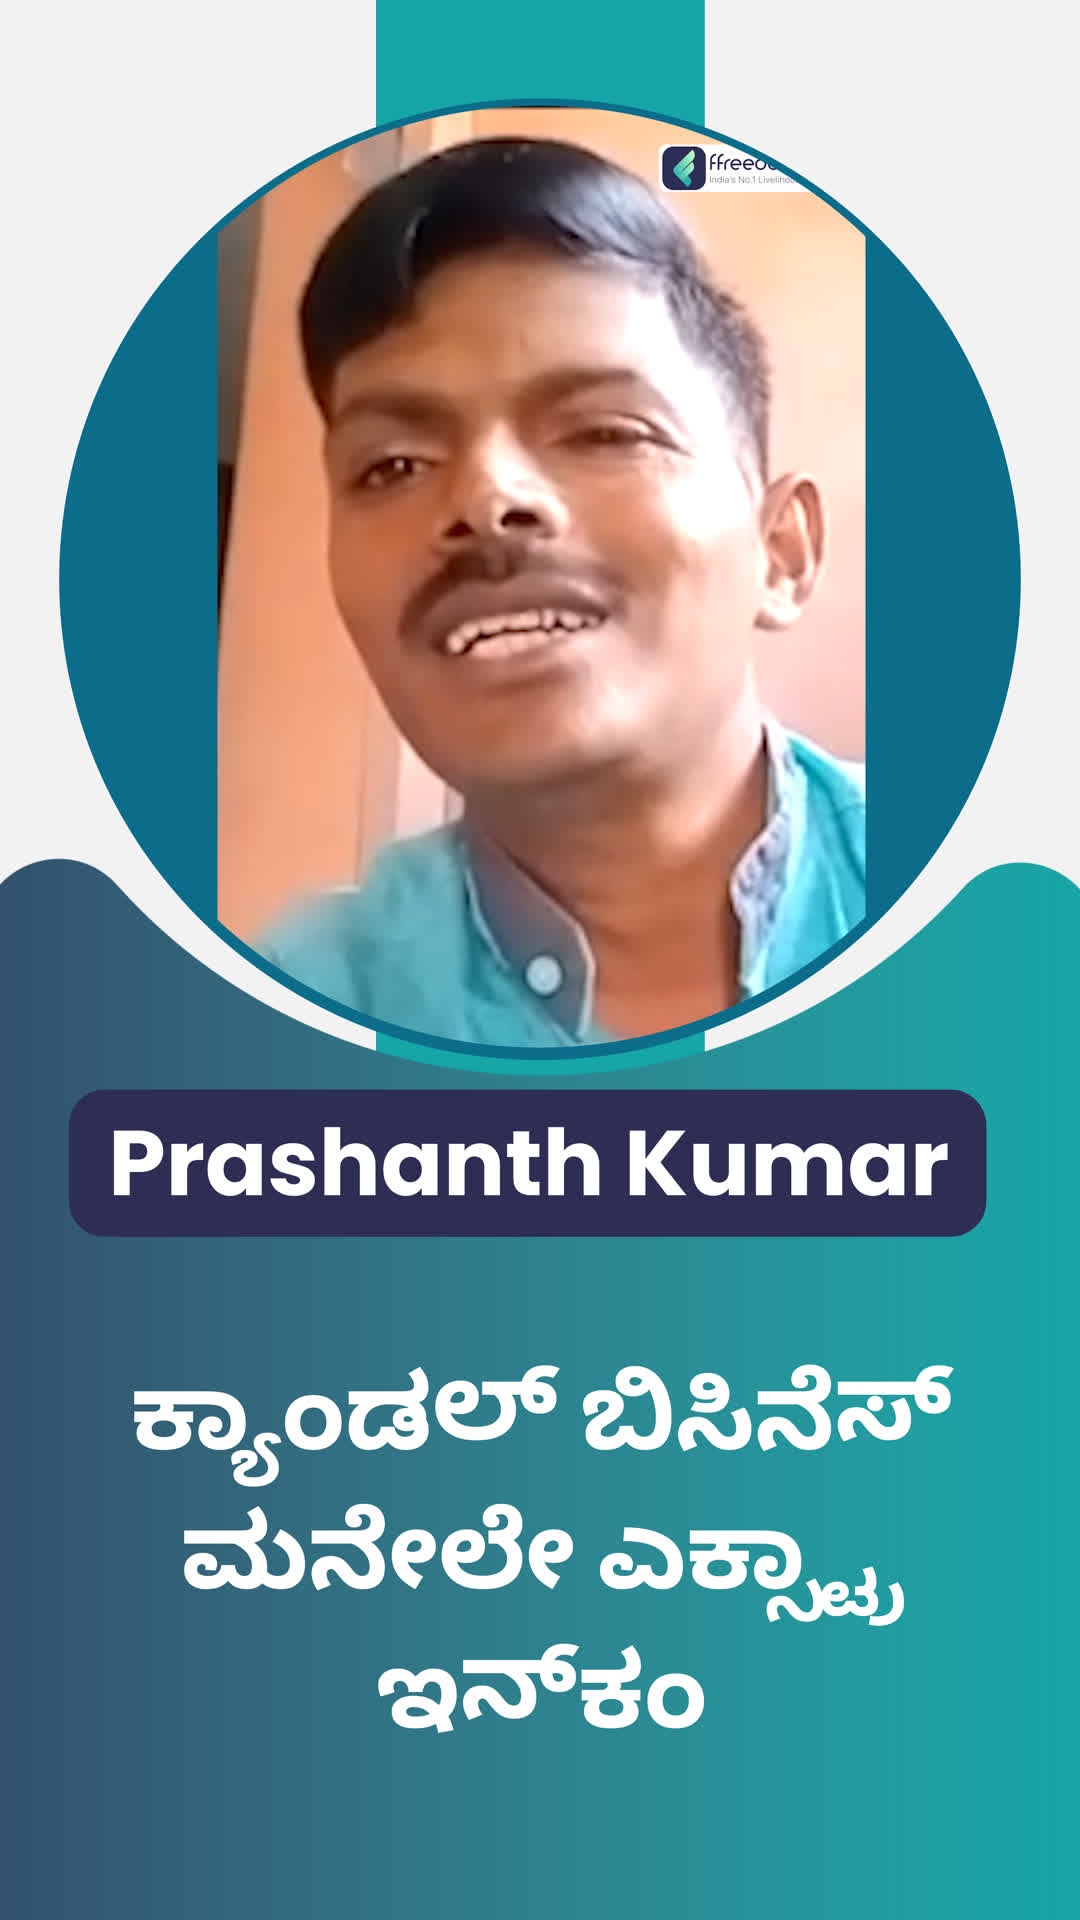 prashanth kumar s m  's Honest Review of ffreedom app - Ballari ,Karnataka